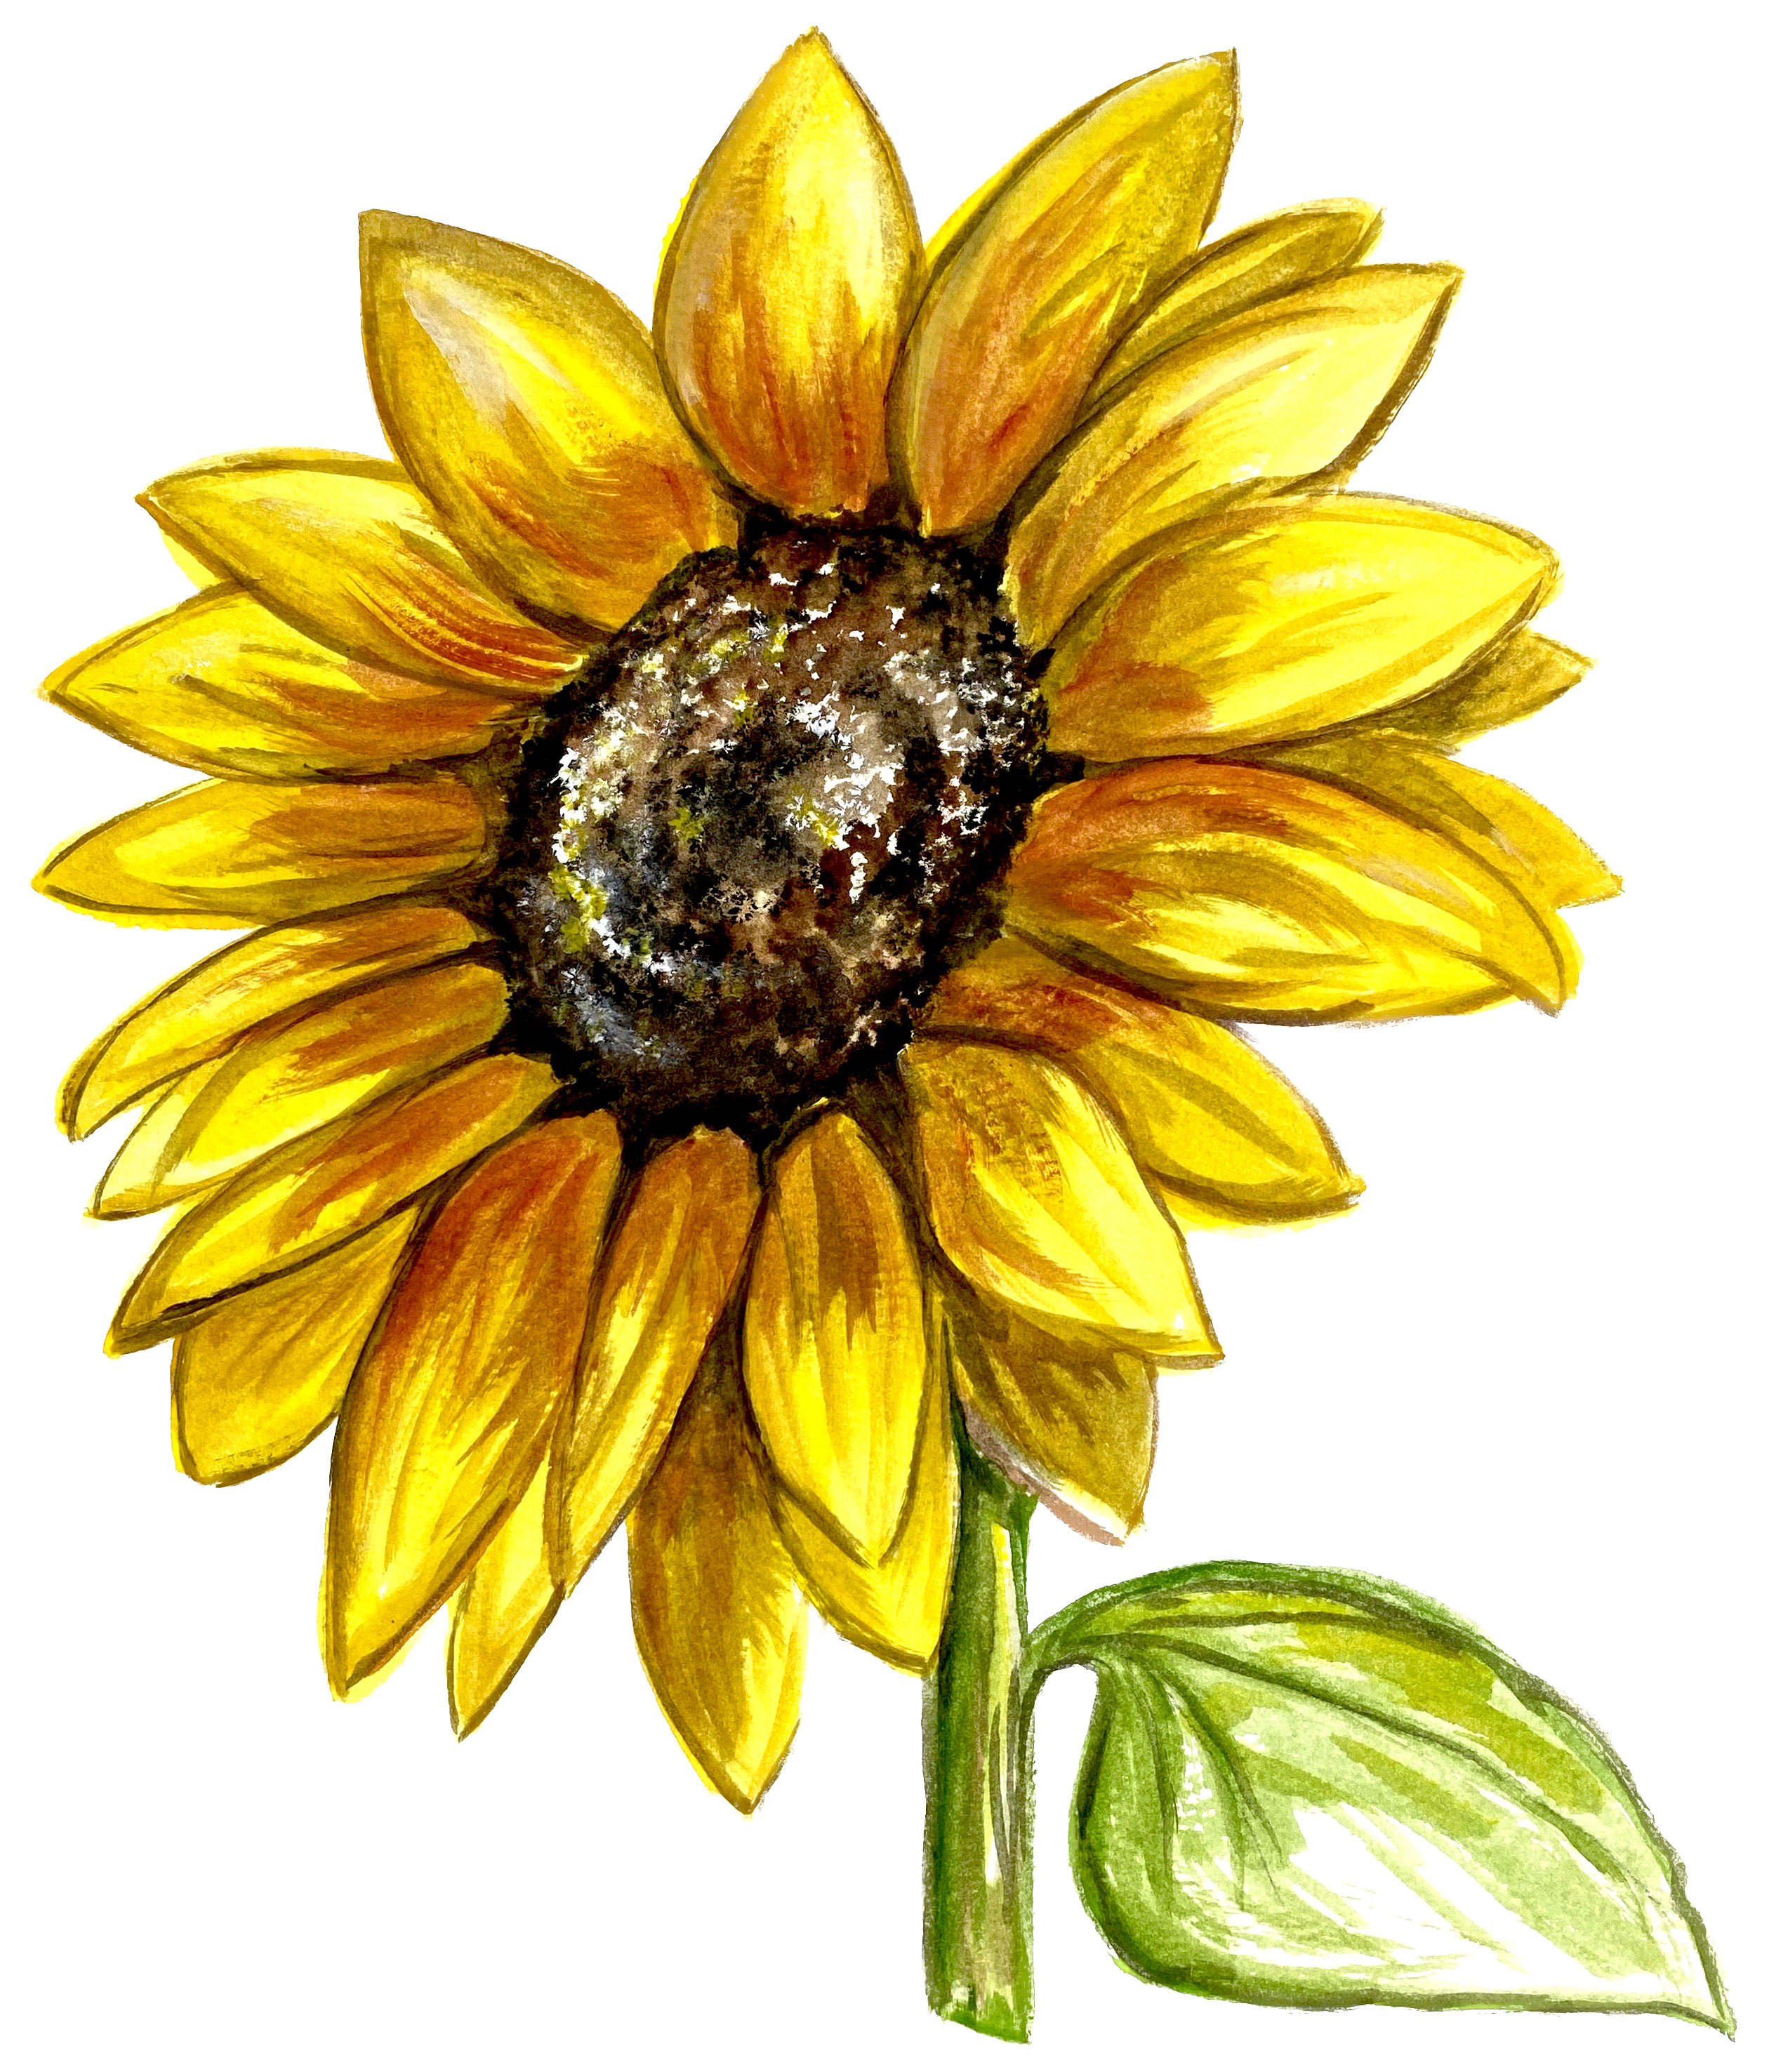 Sunflower with Stem